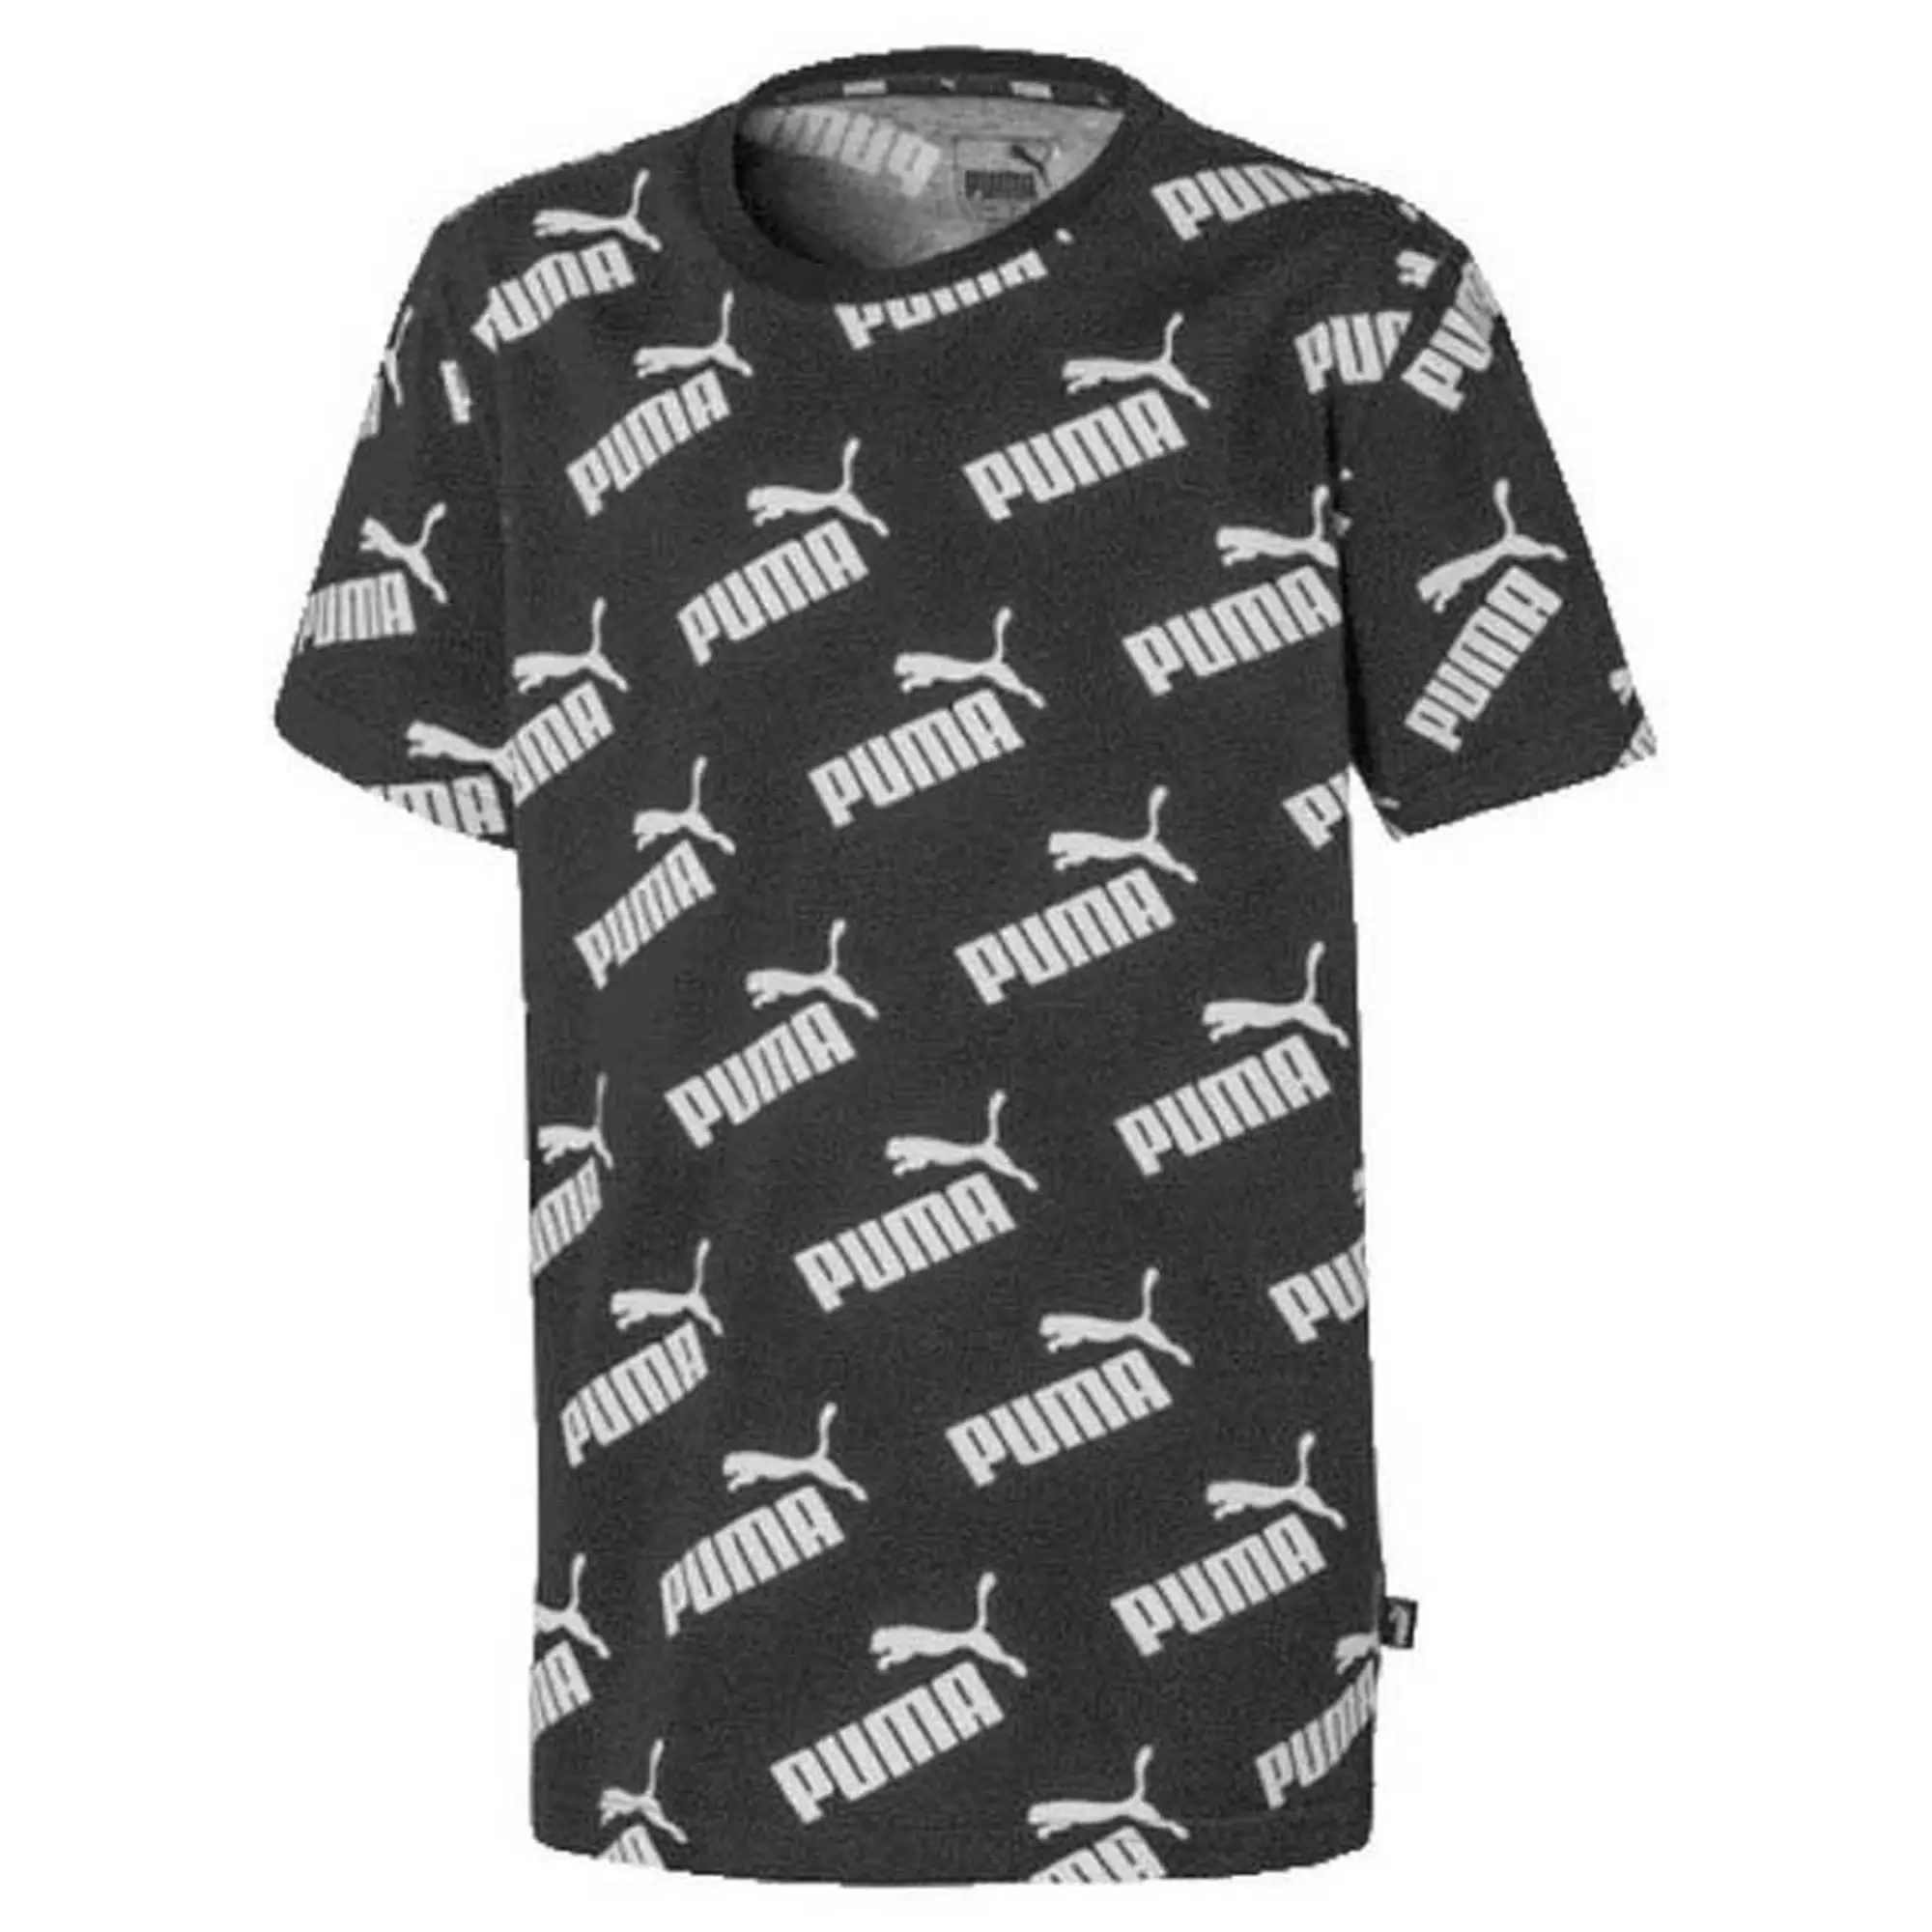 Puma Amplified All Over Print Short Sleeve T-shirt  - Black